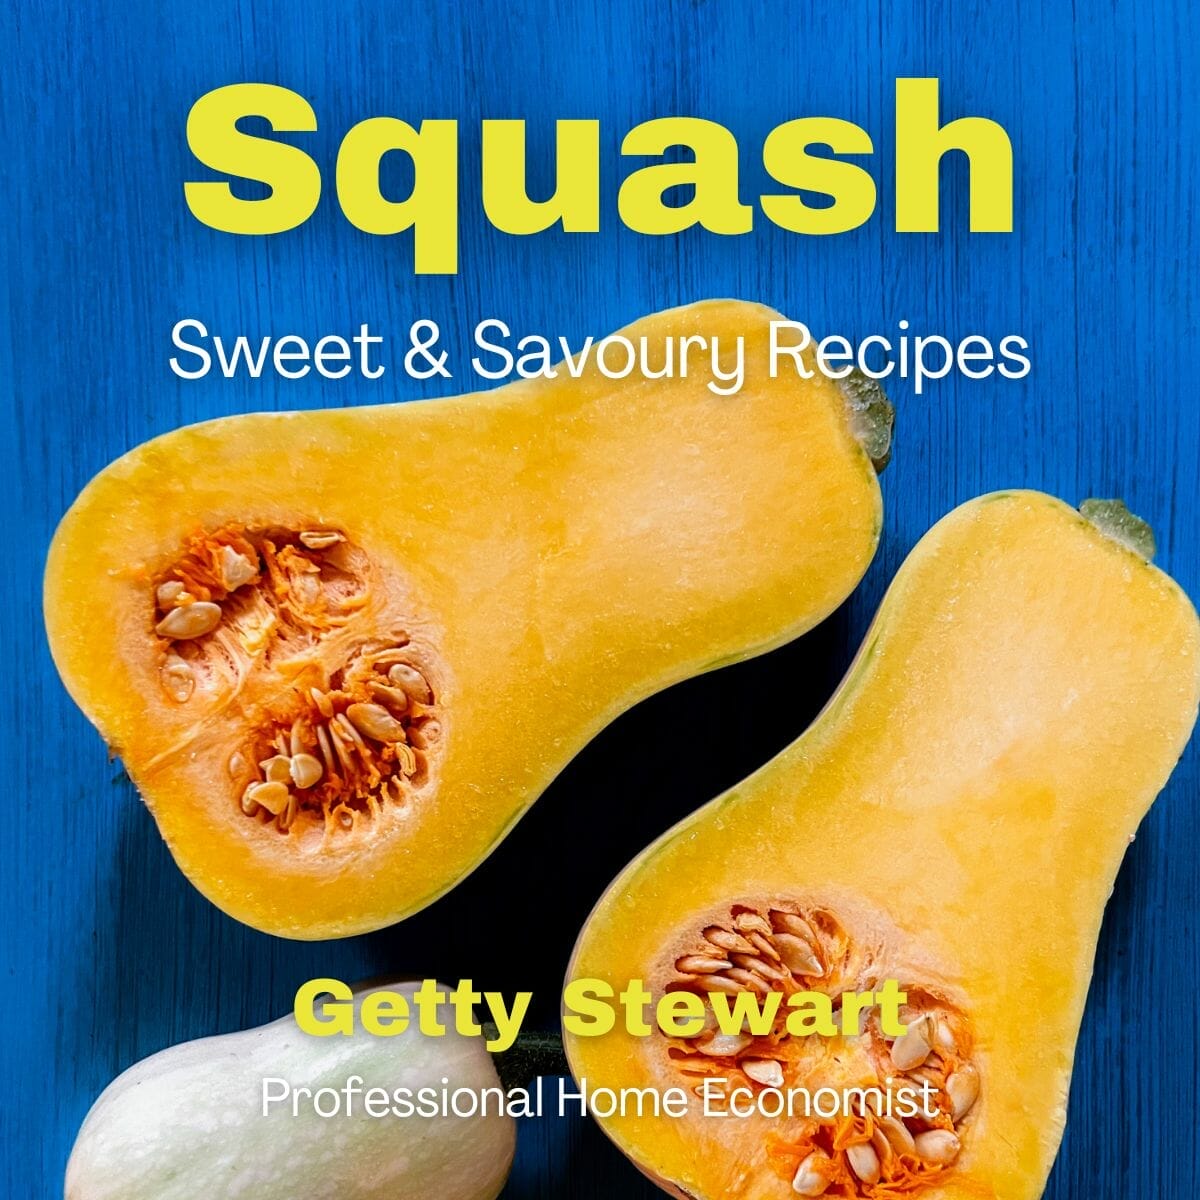 Squash: Sweet & Savoury Recipes